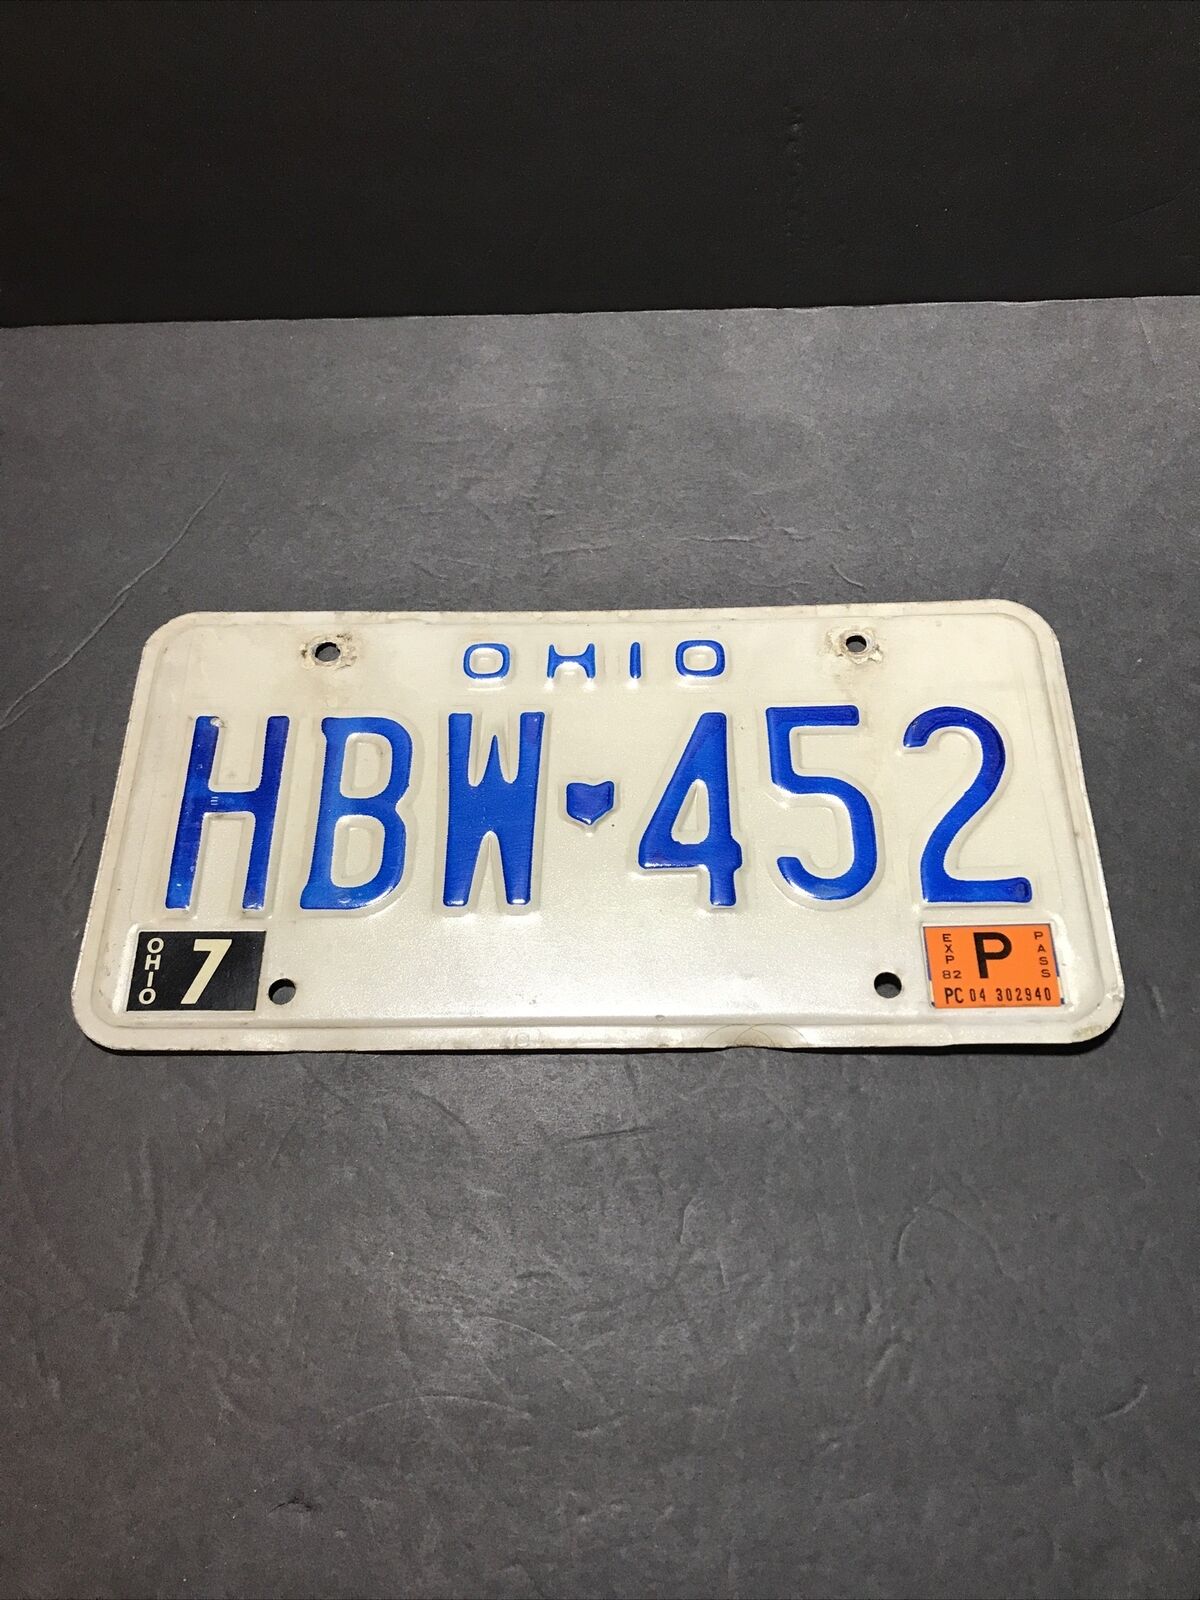 1982 Ohio License Plate Original Condition HBW 452